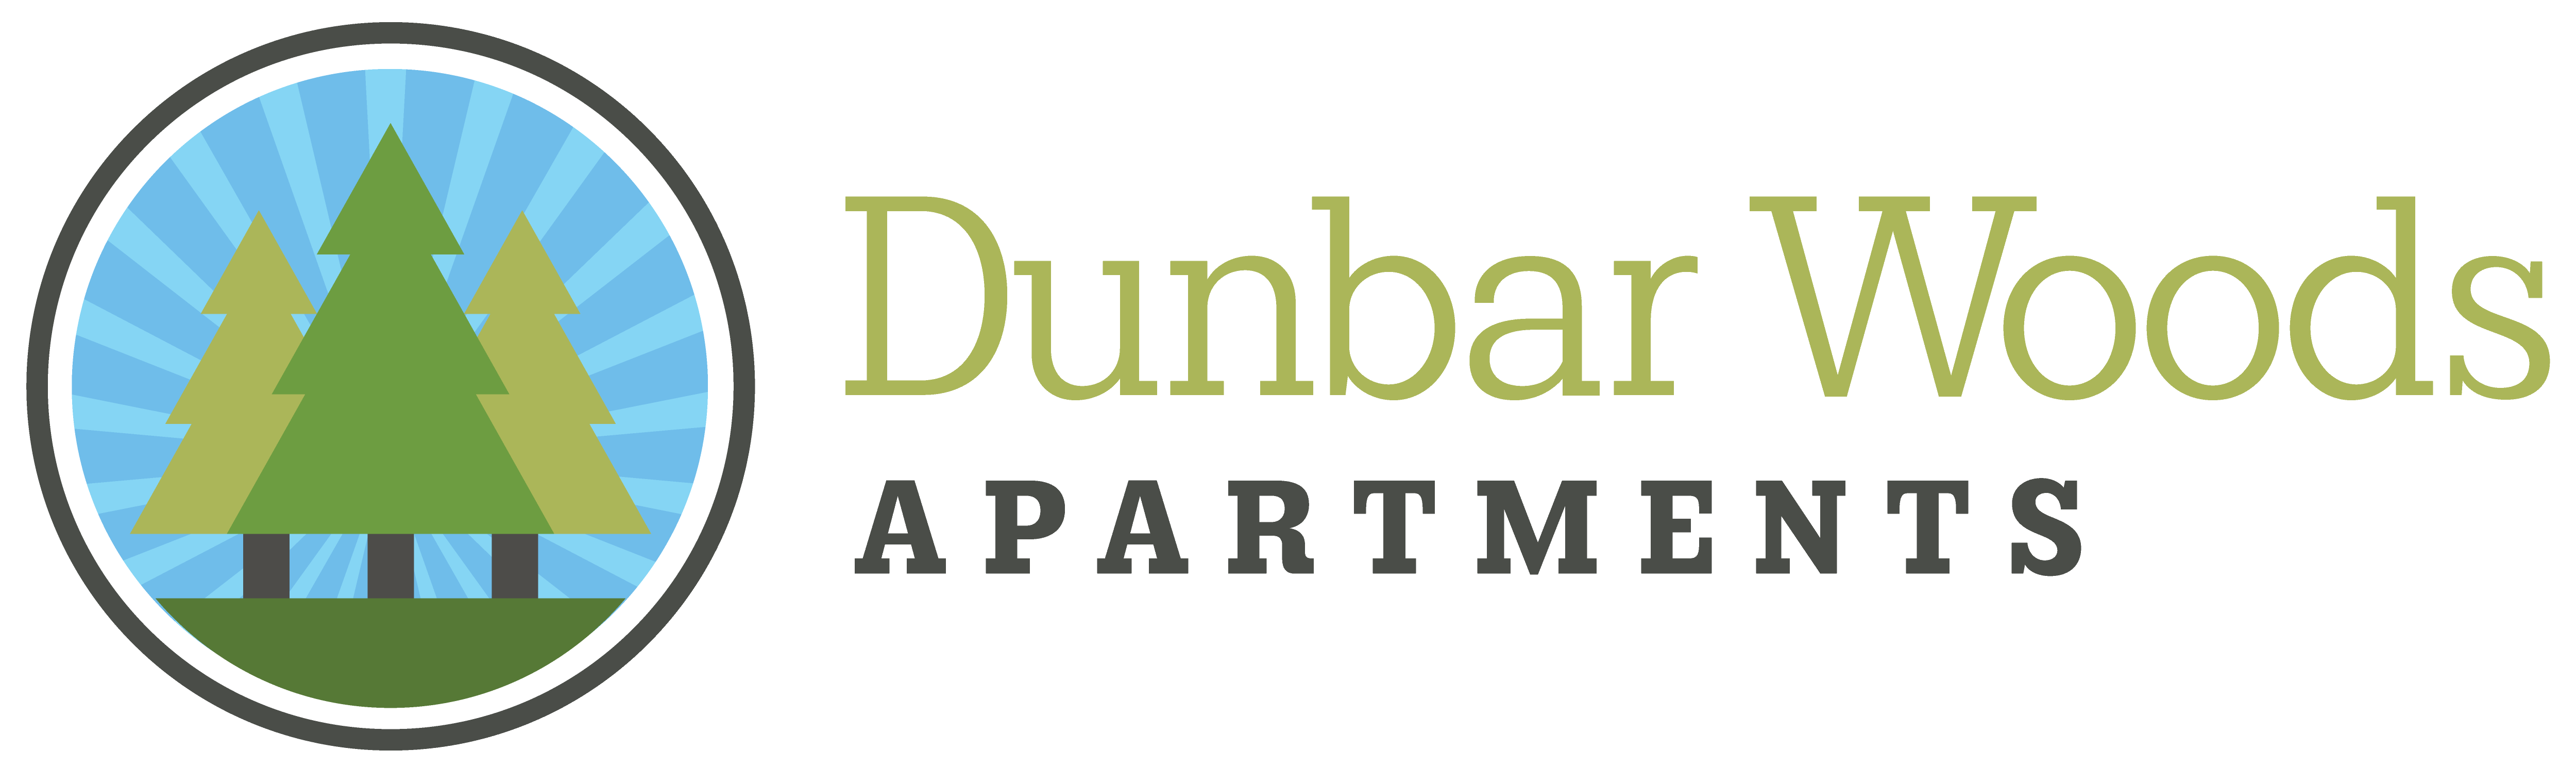 Dunbar Woods Apartments